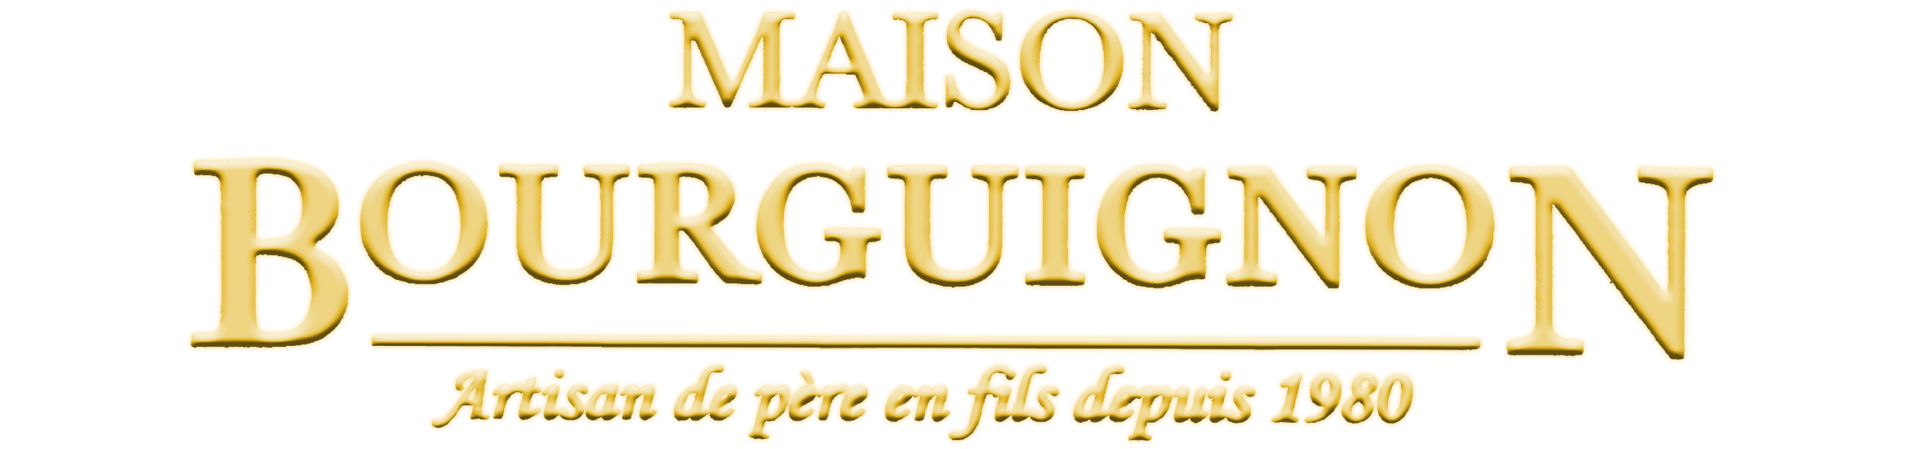 Maison Bourguignon